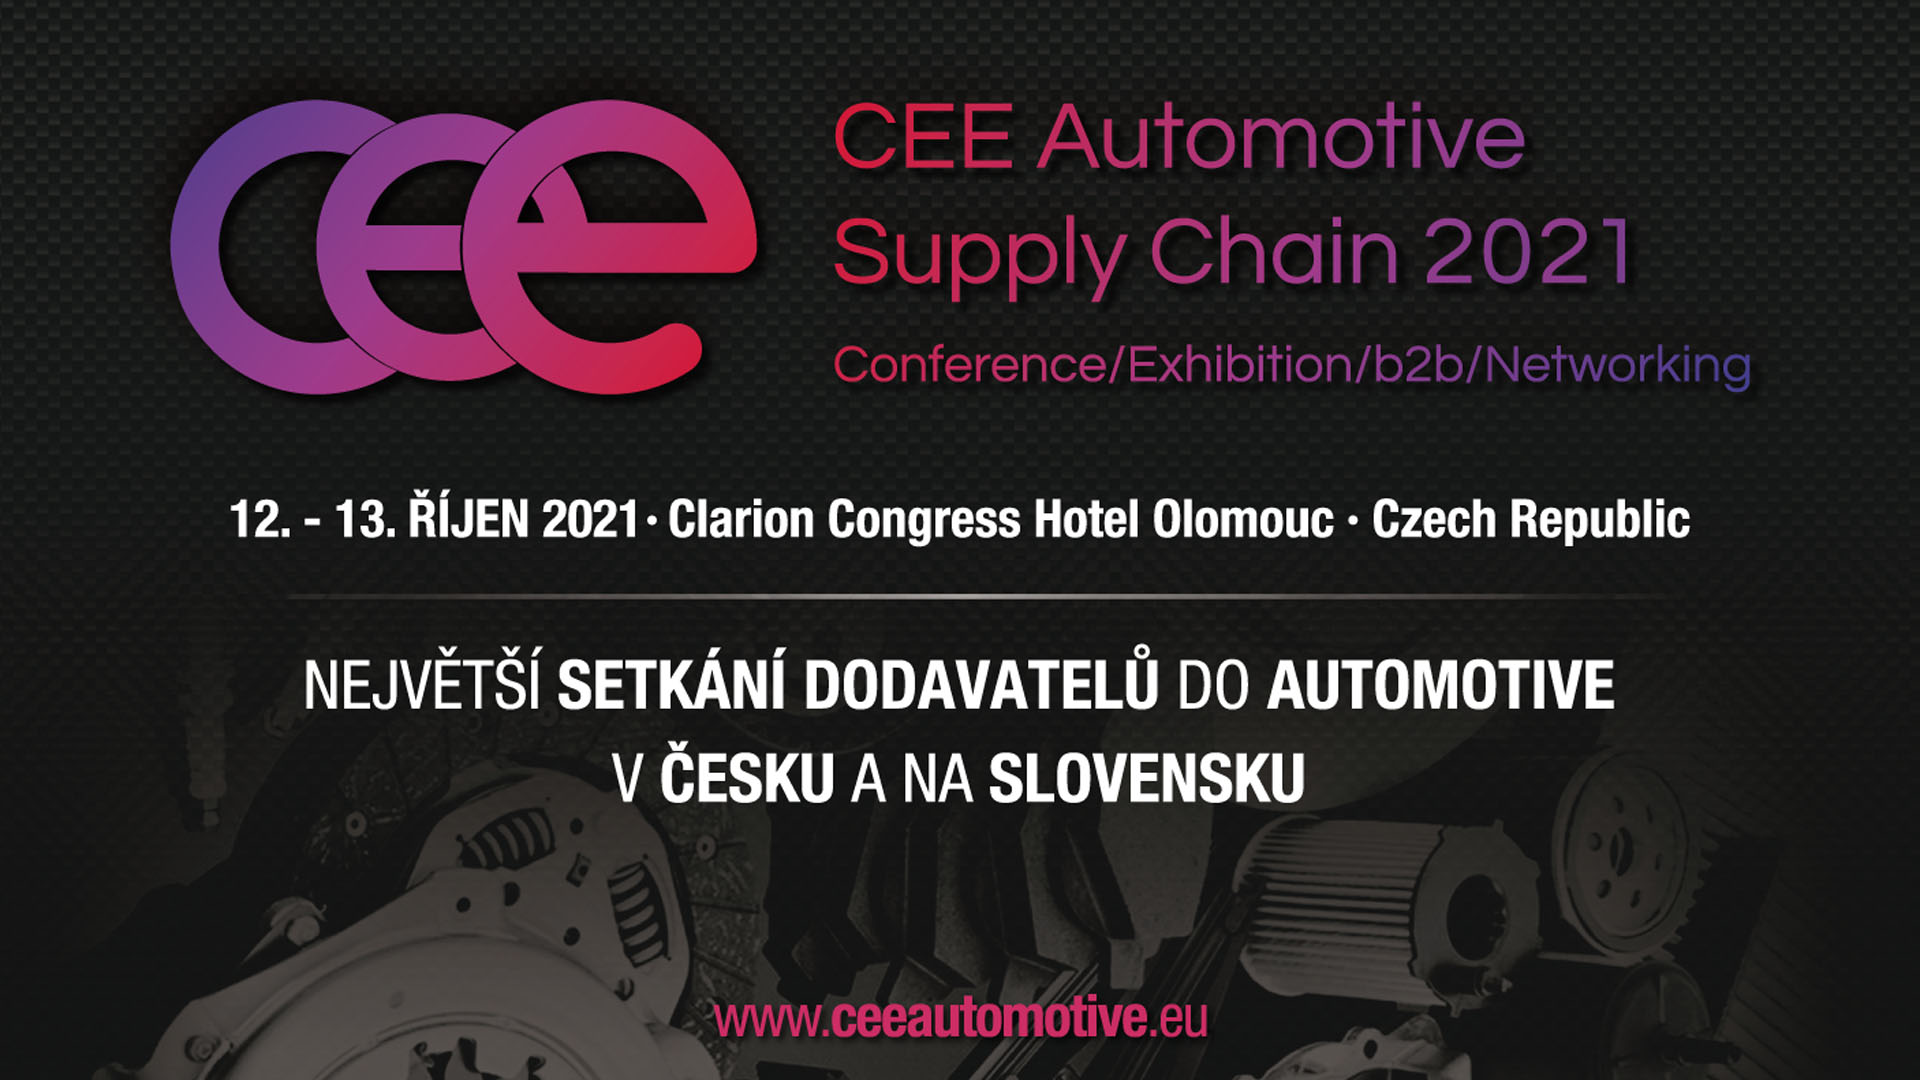 CEE Automotive Supply Chain 2021